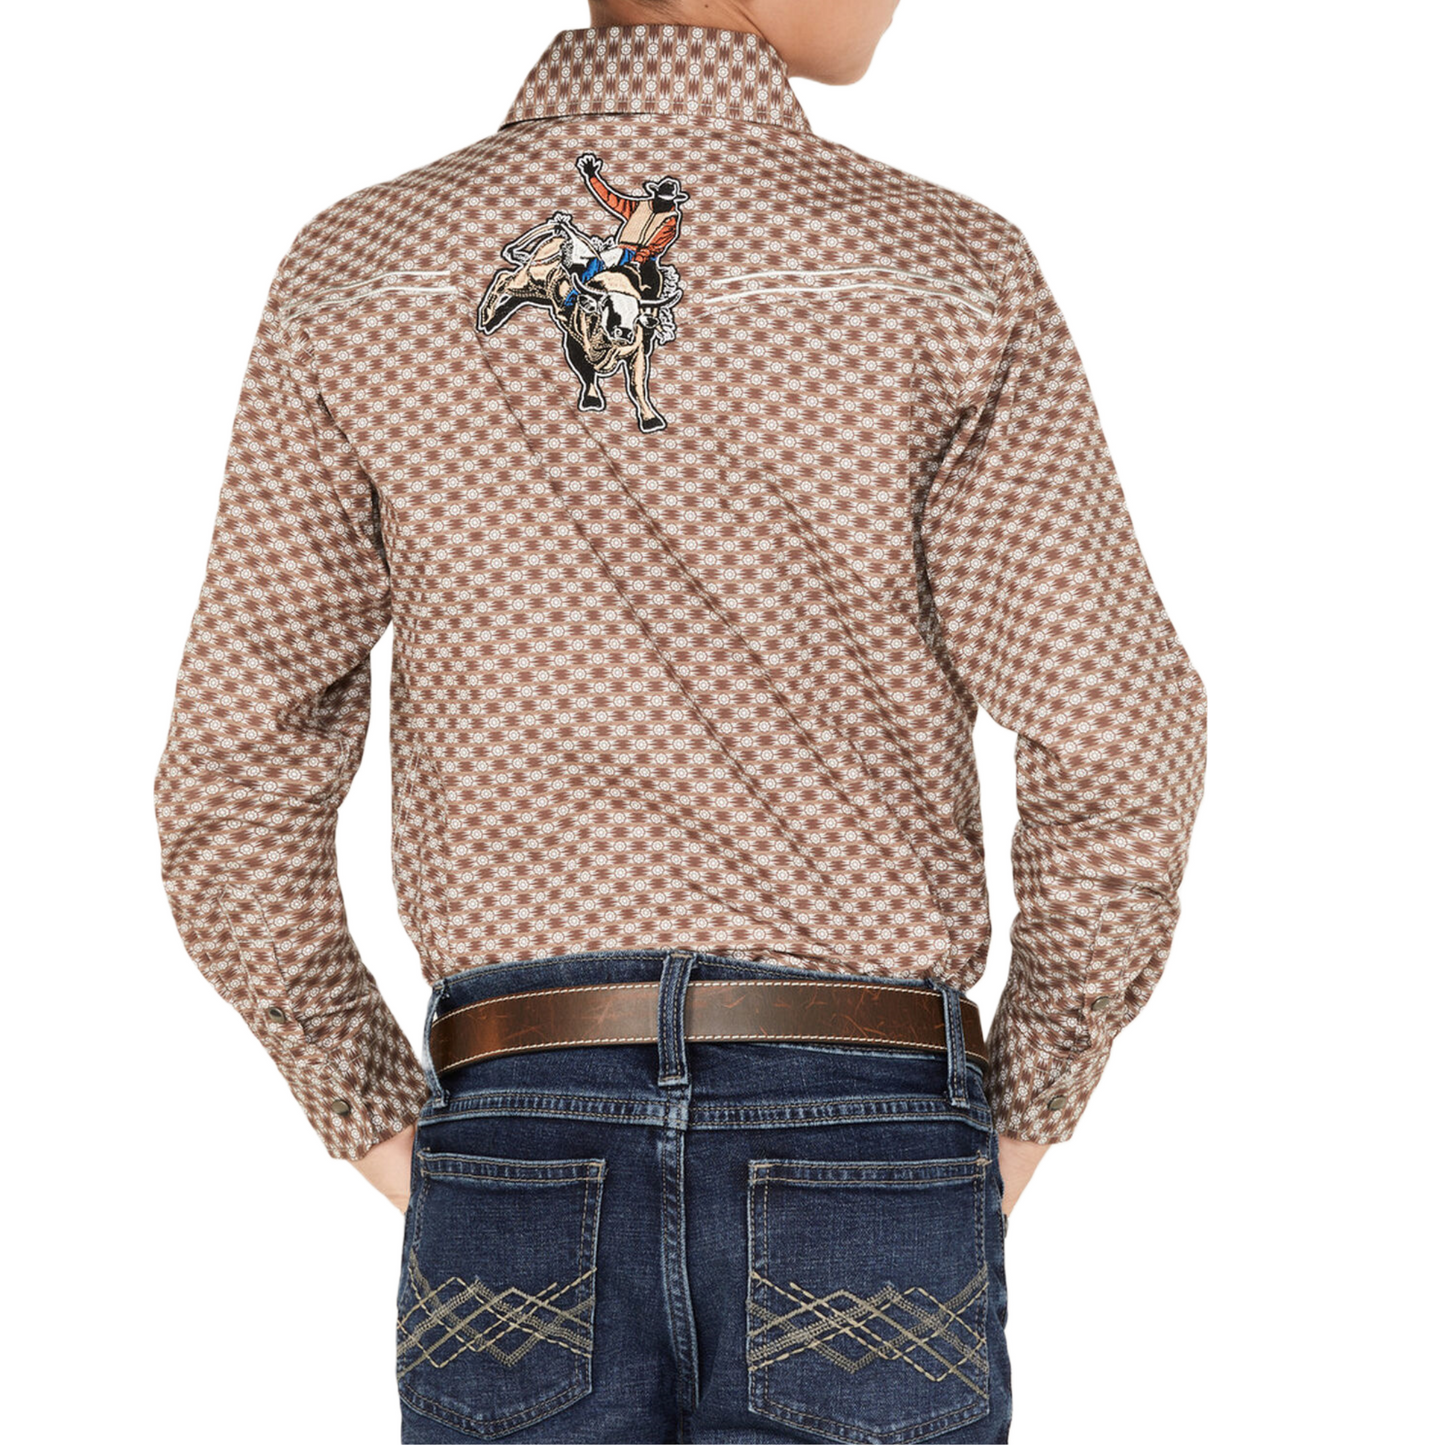 Cowboy Hardware Boy's Rolodex Brown Snap Shirt 325477-660-K